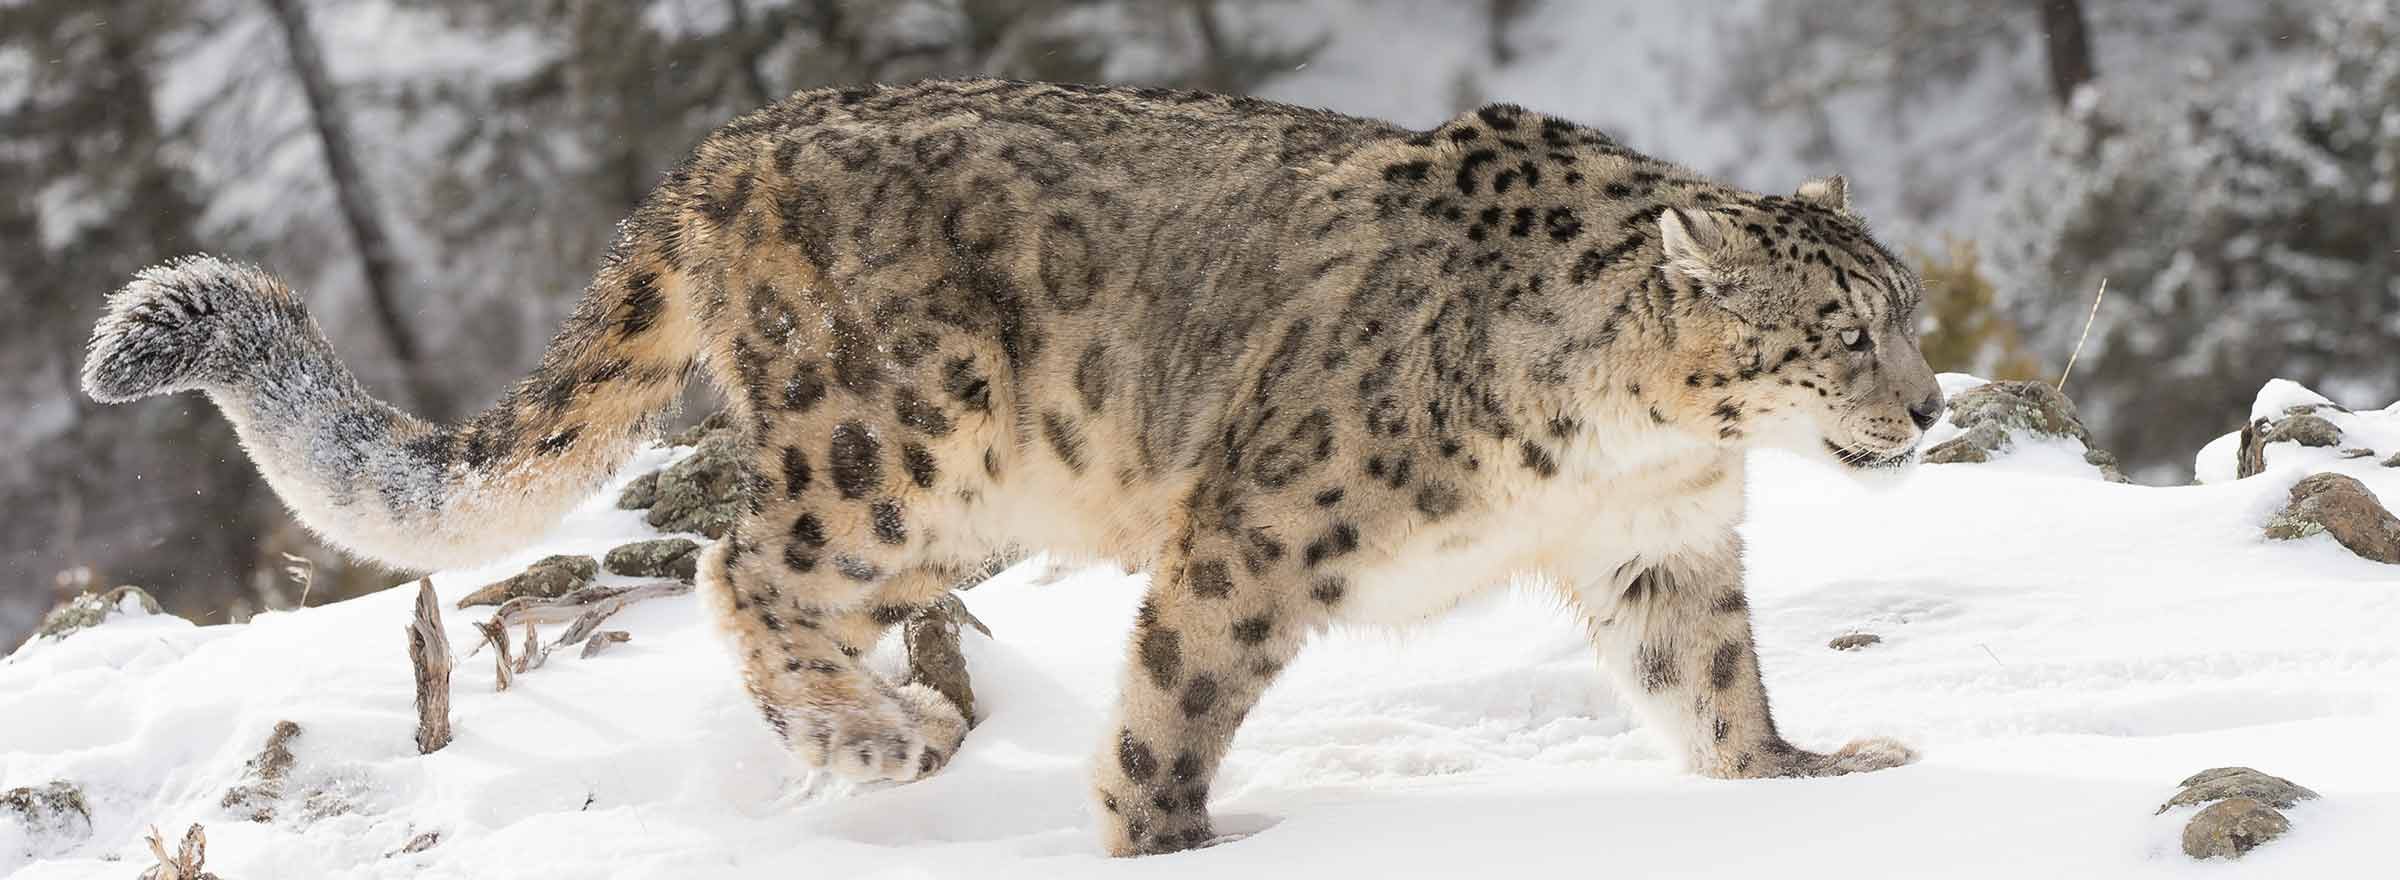 a snow leopard stalking through a snowy landscape